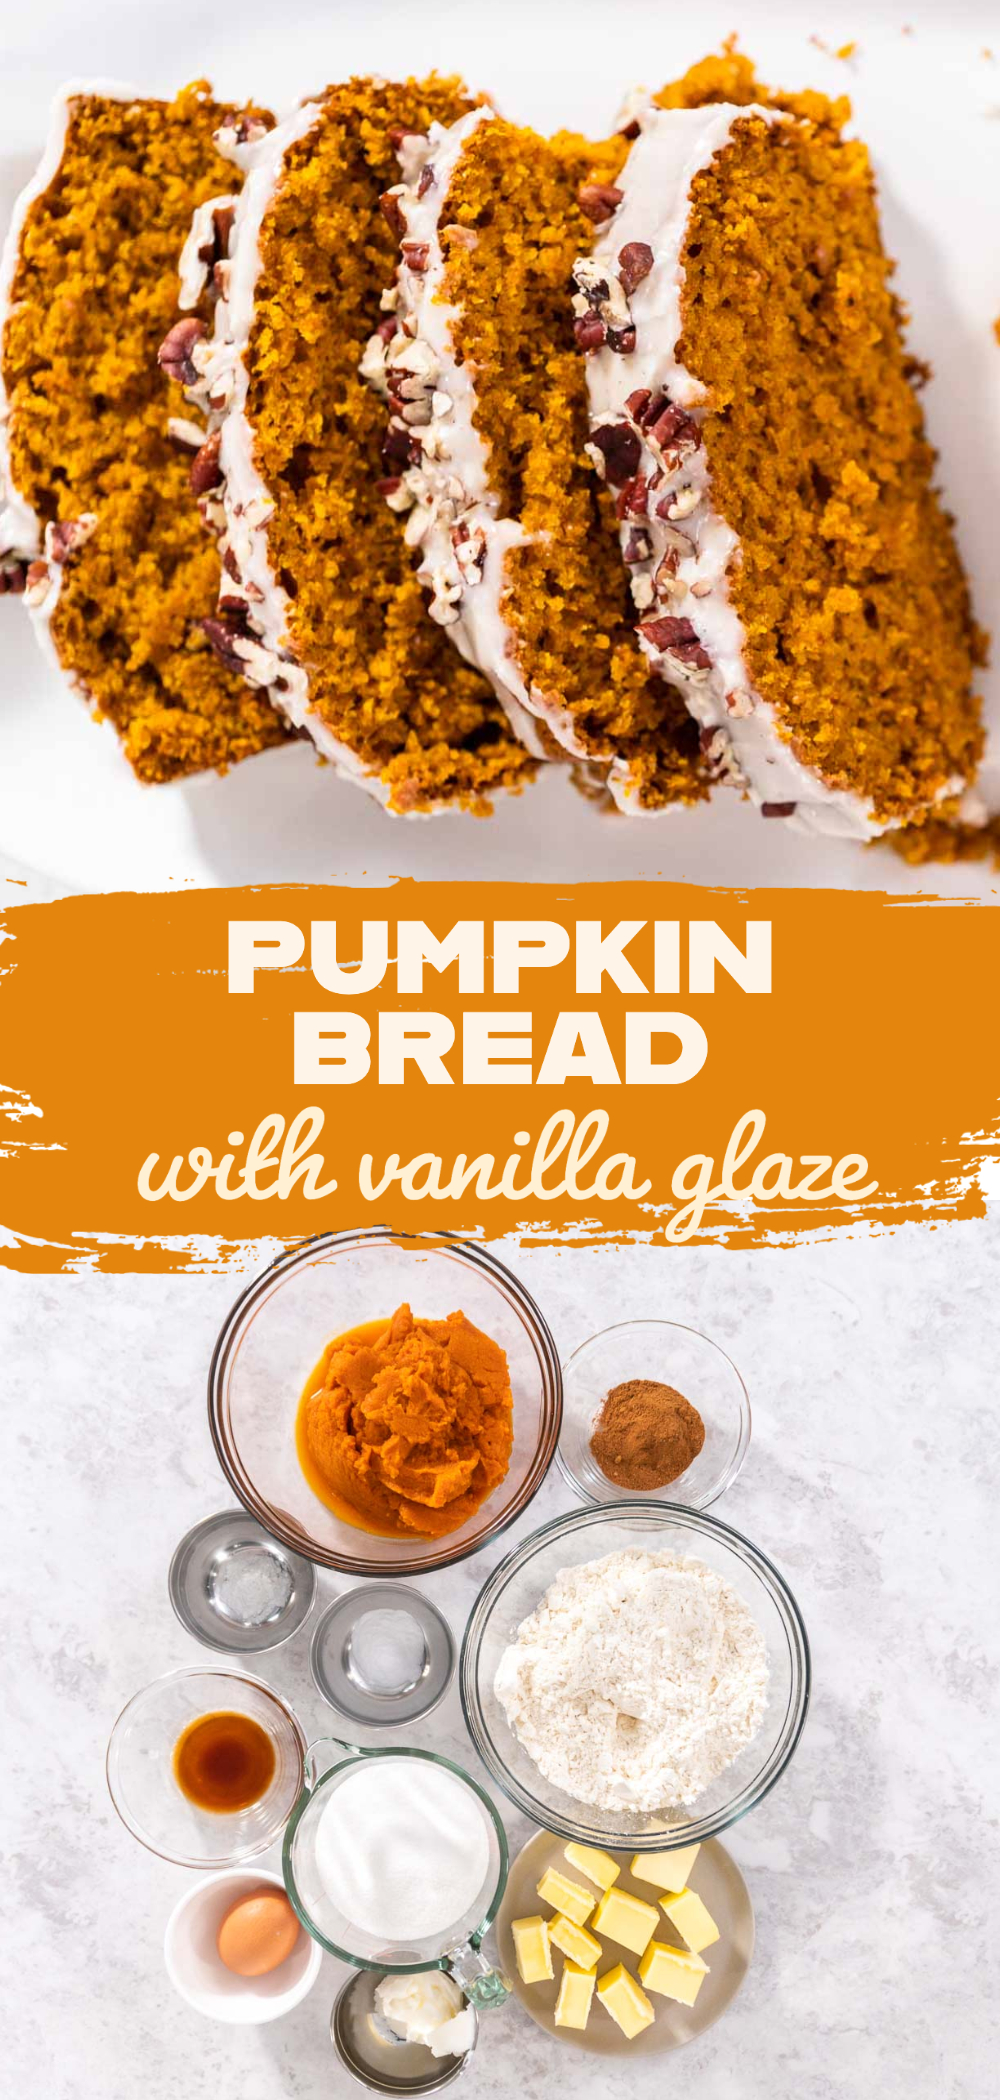 Pumpkin bread with vanilla glaze and pecans